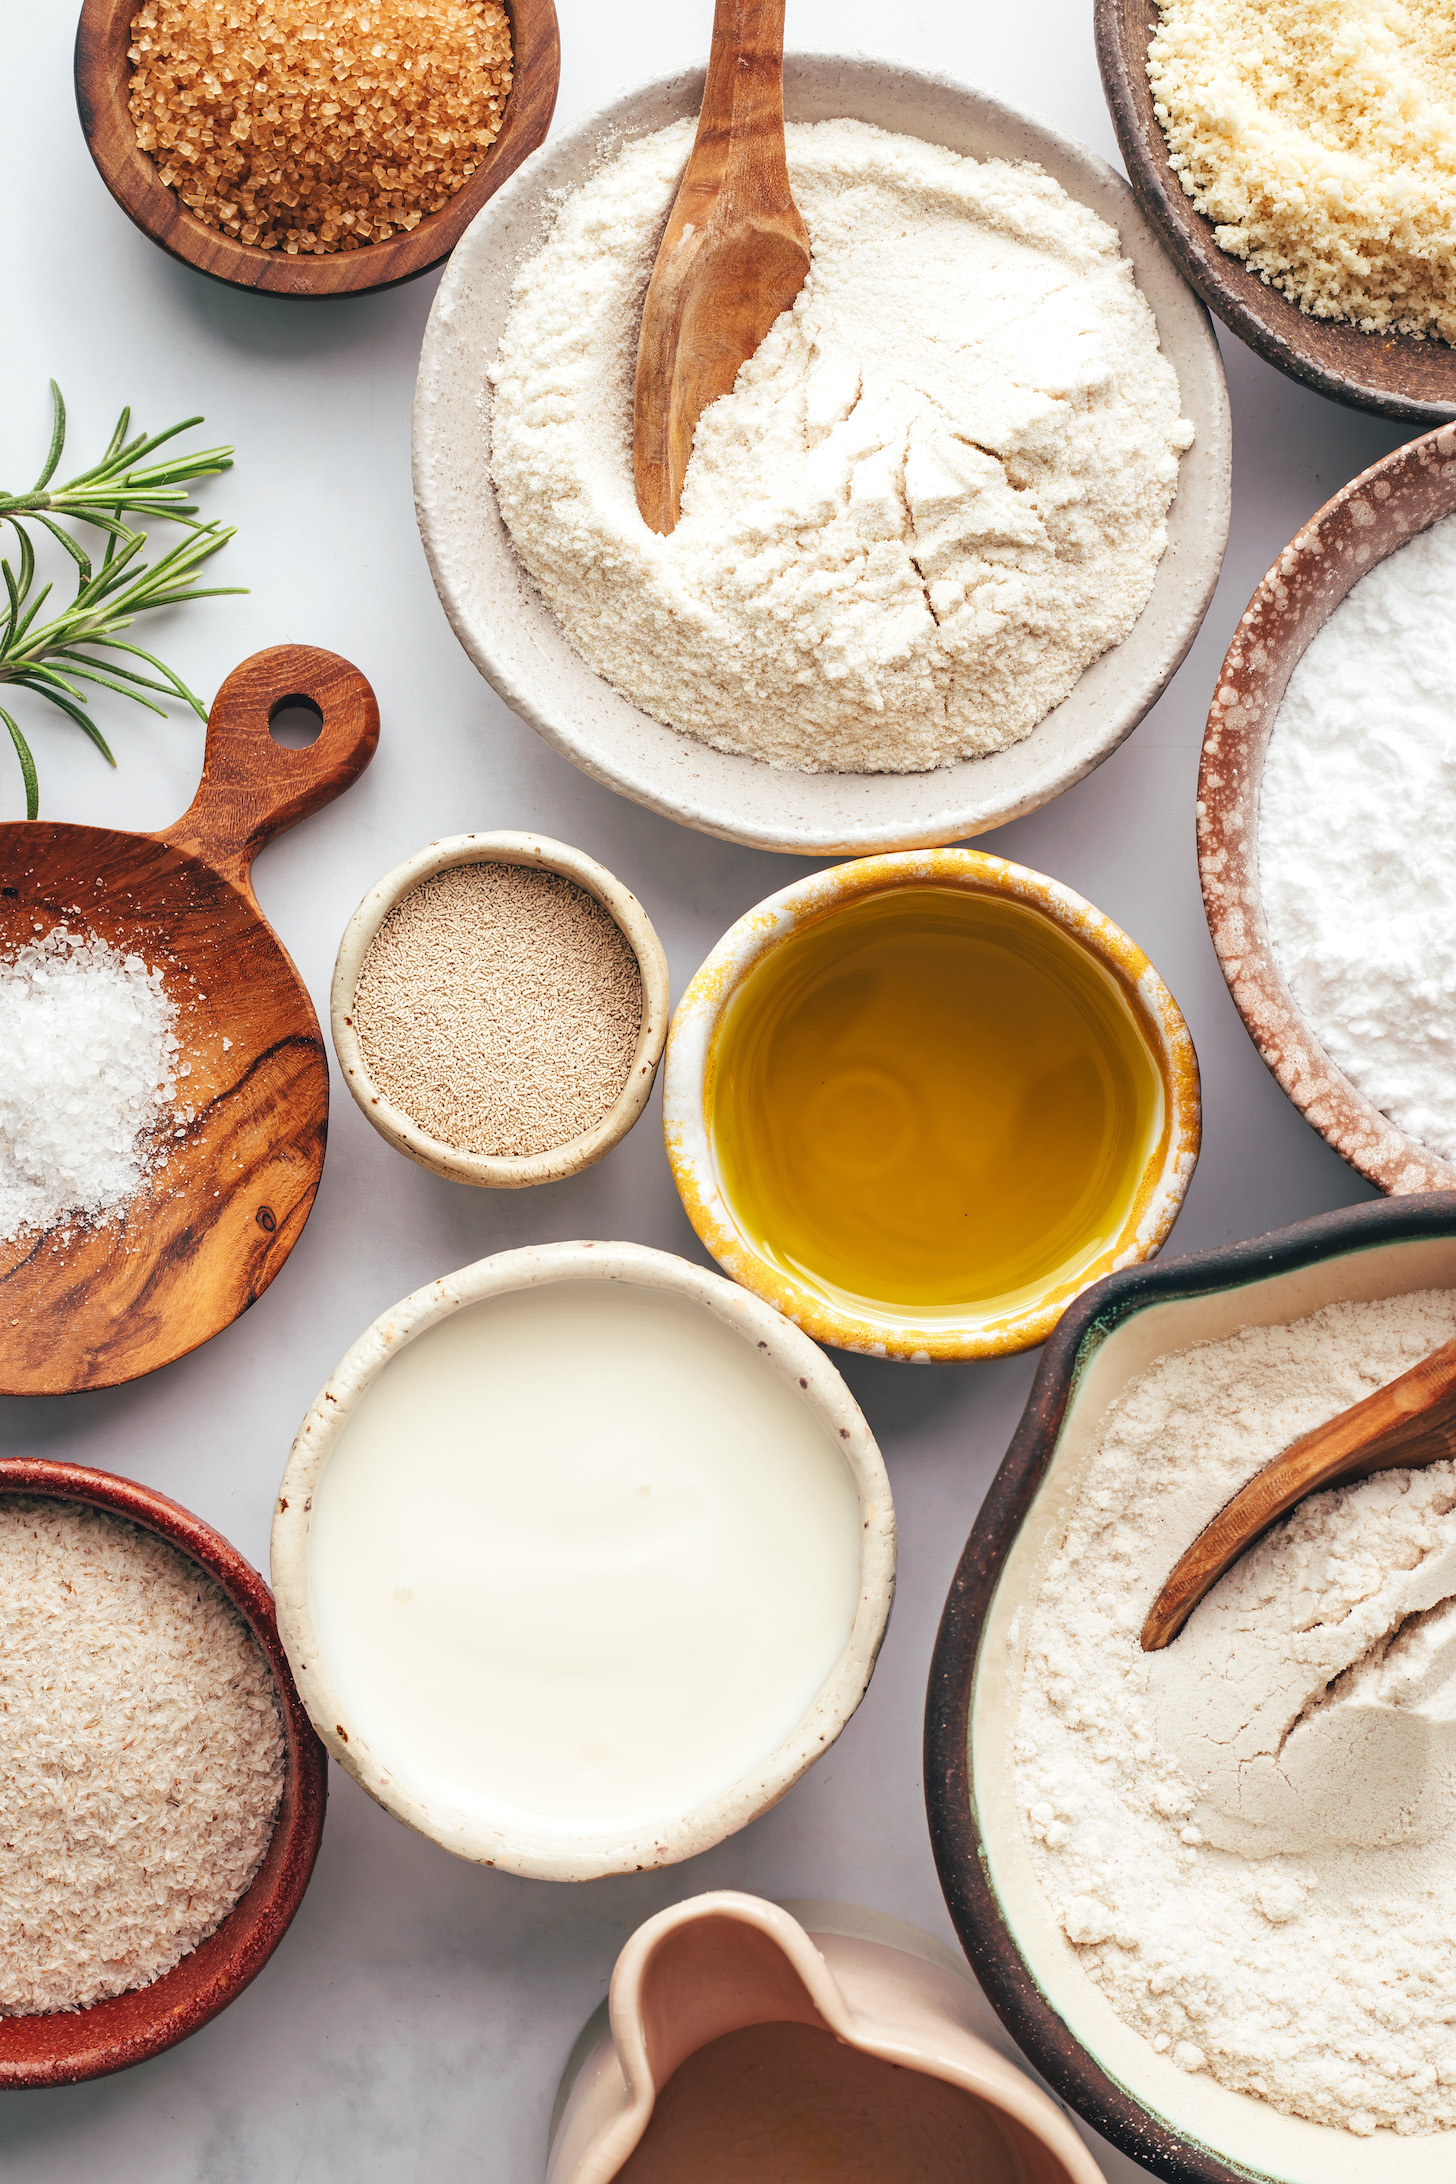 Cane sugar, brown rice flour, almond flour, potato starch, sorghum flour, olive oil, yeast, coconut yogurt, psyllium and salt